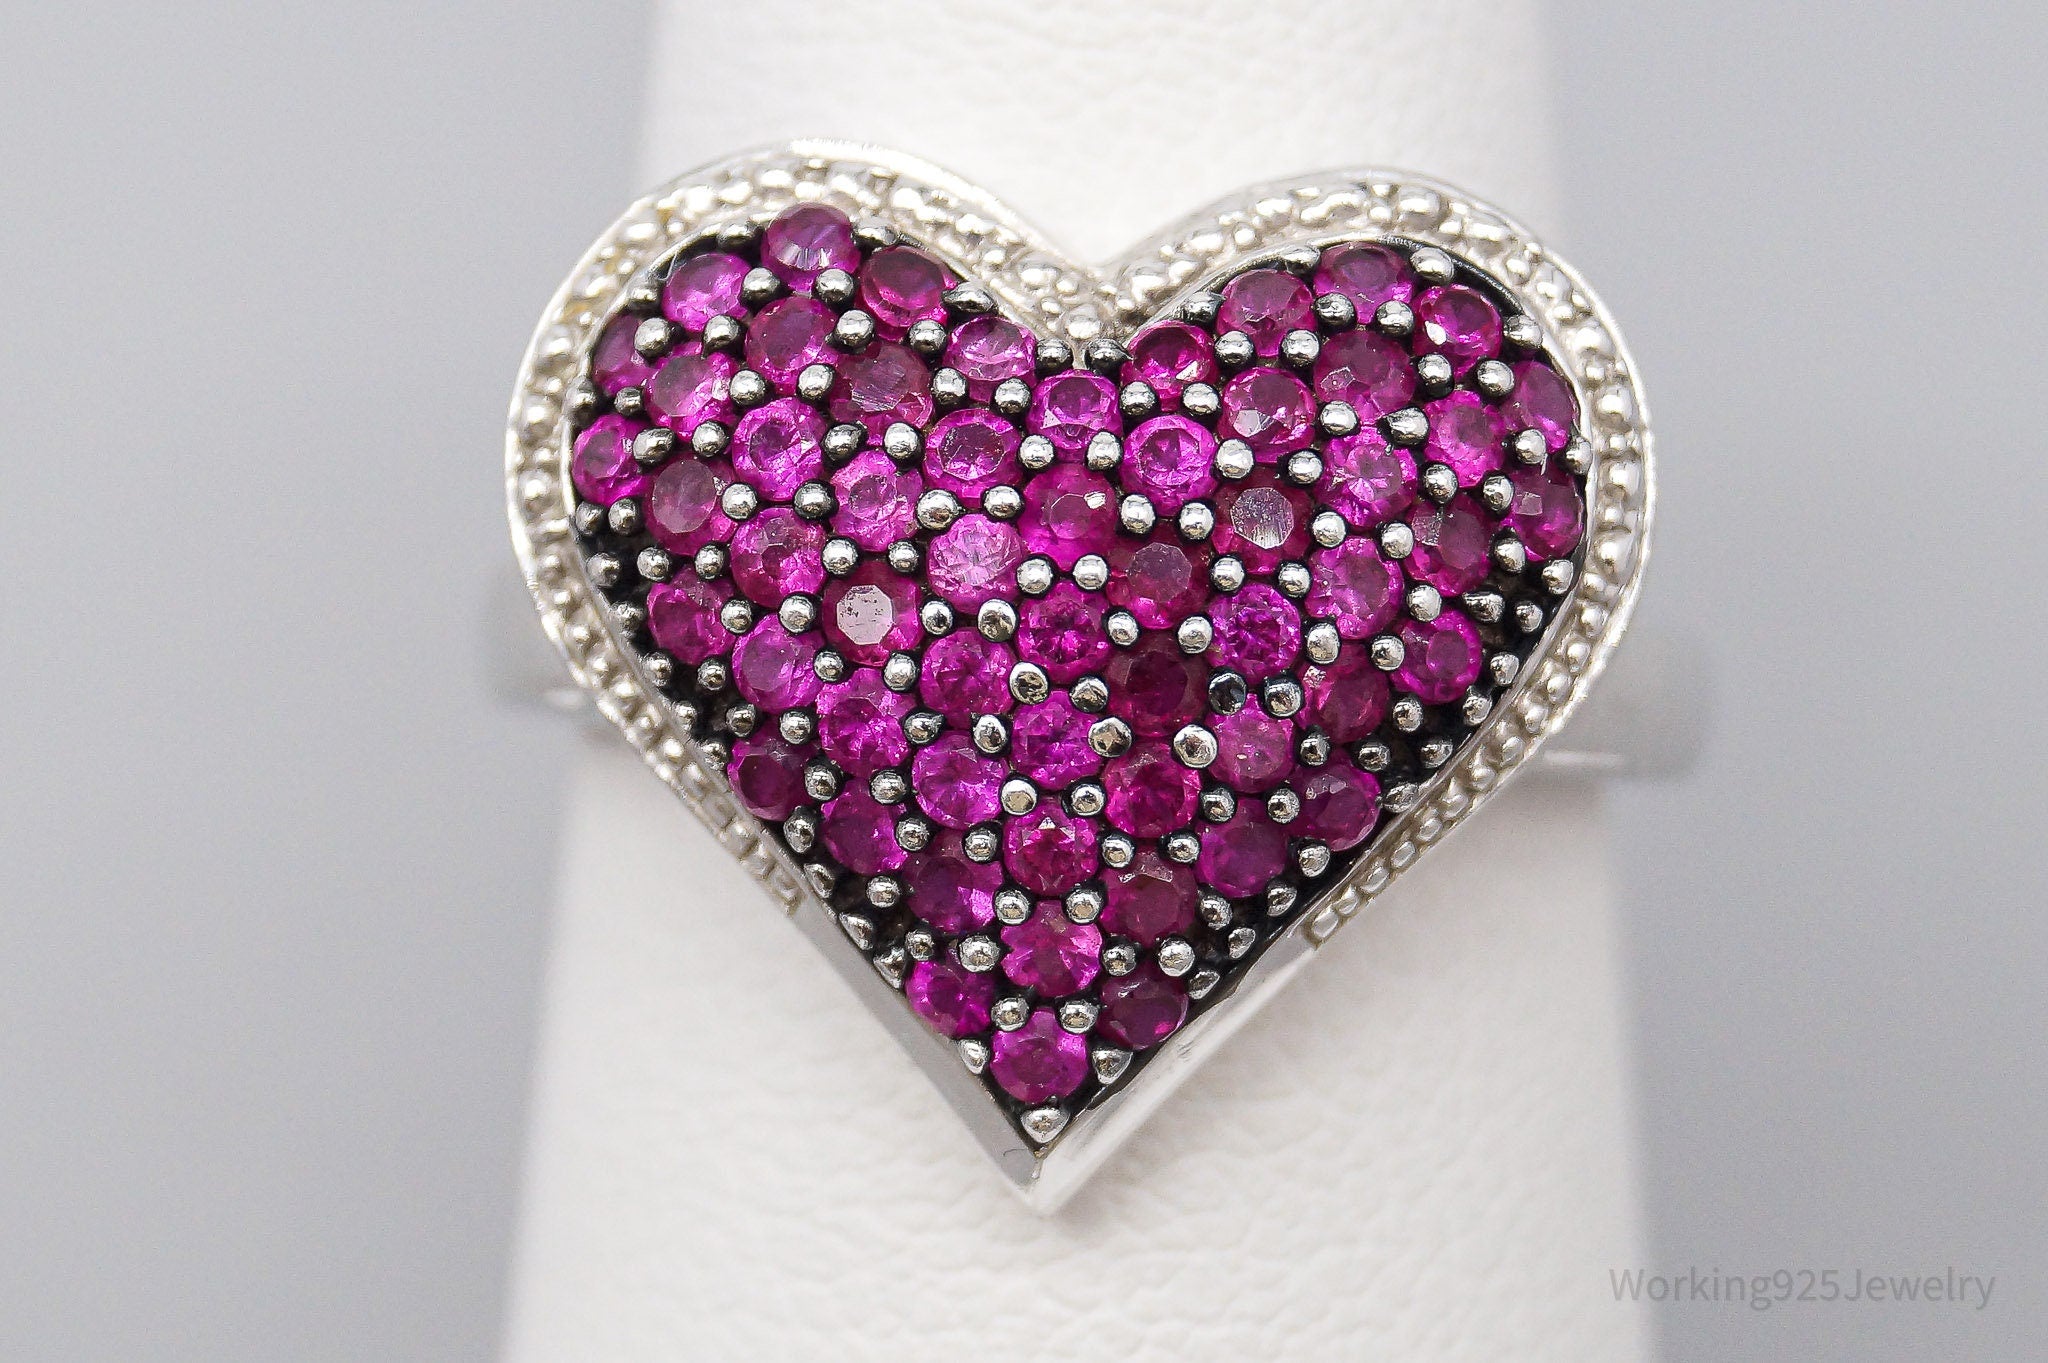 VTG Ruby Heart Sterling Silver Ring - Size 5.75